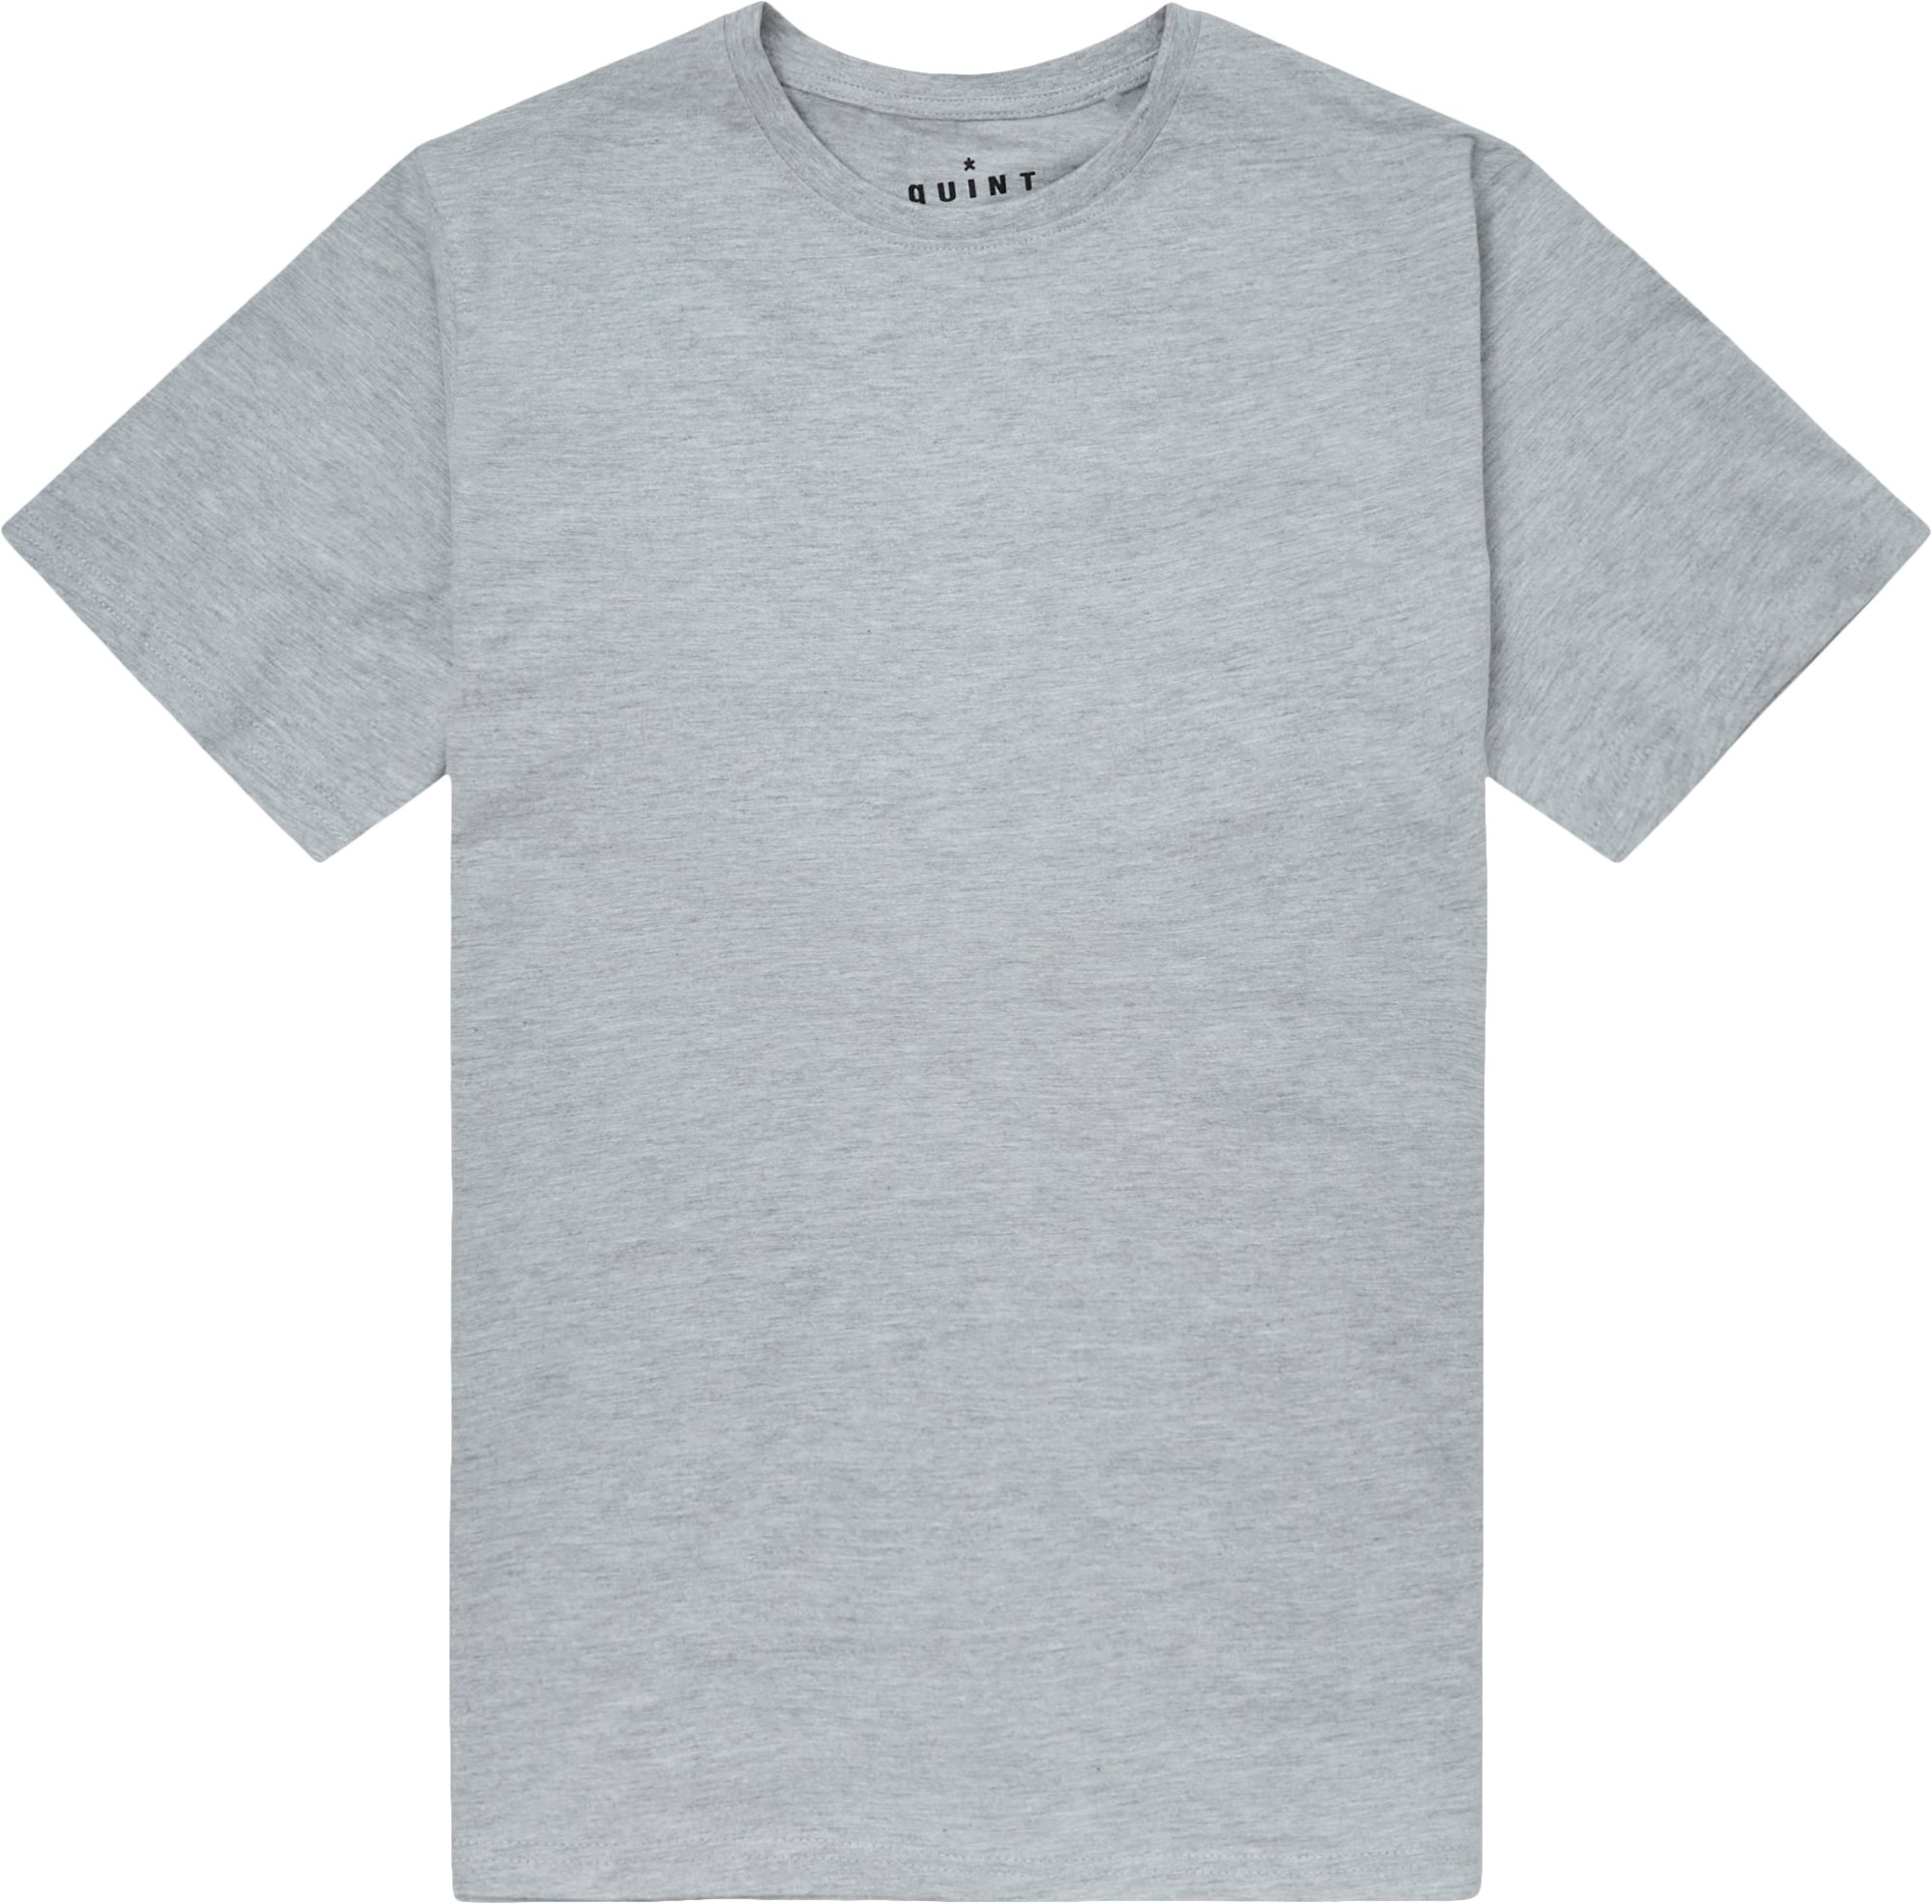 Brandon Crew Neck Tee - T-shirts - Regular fit - Grey